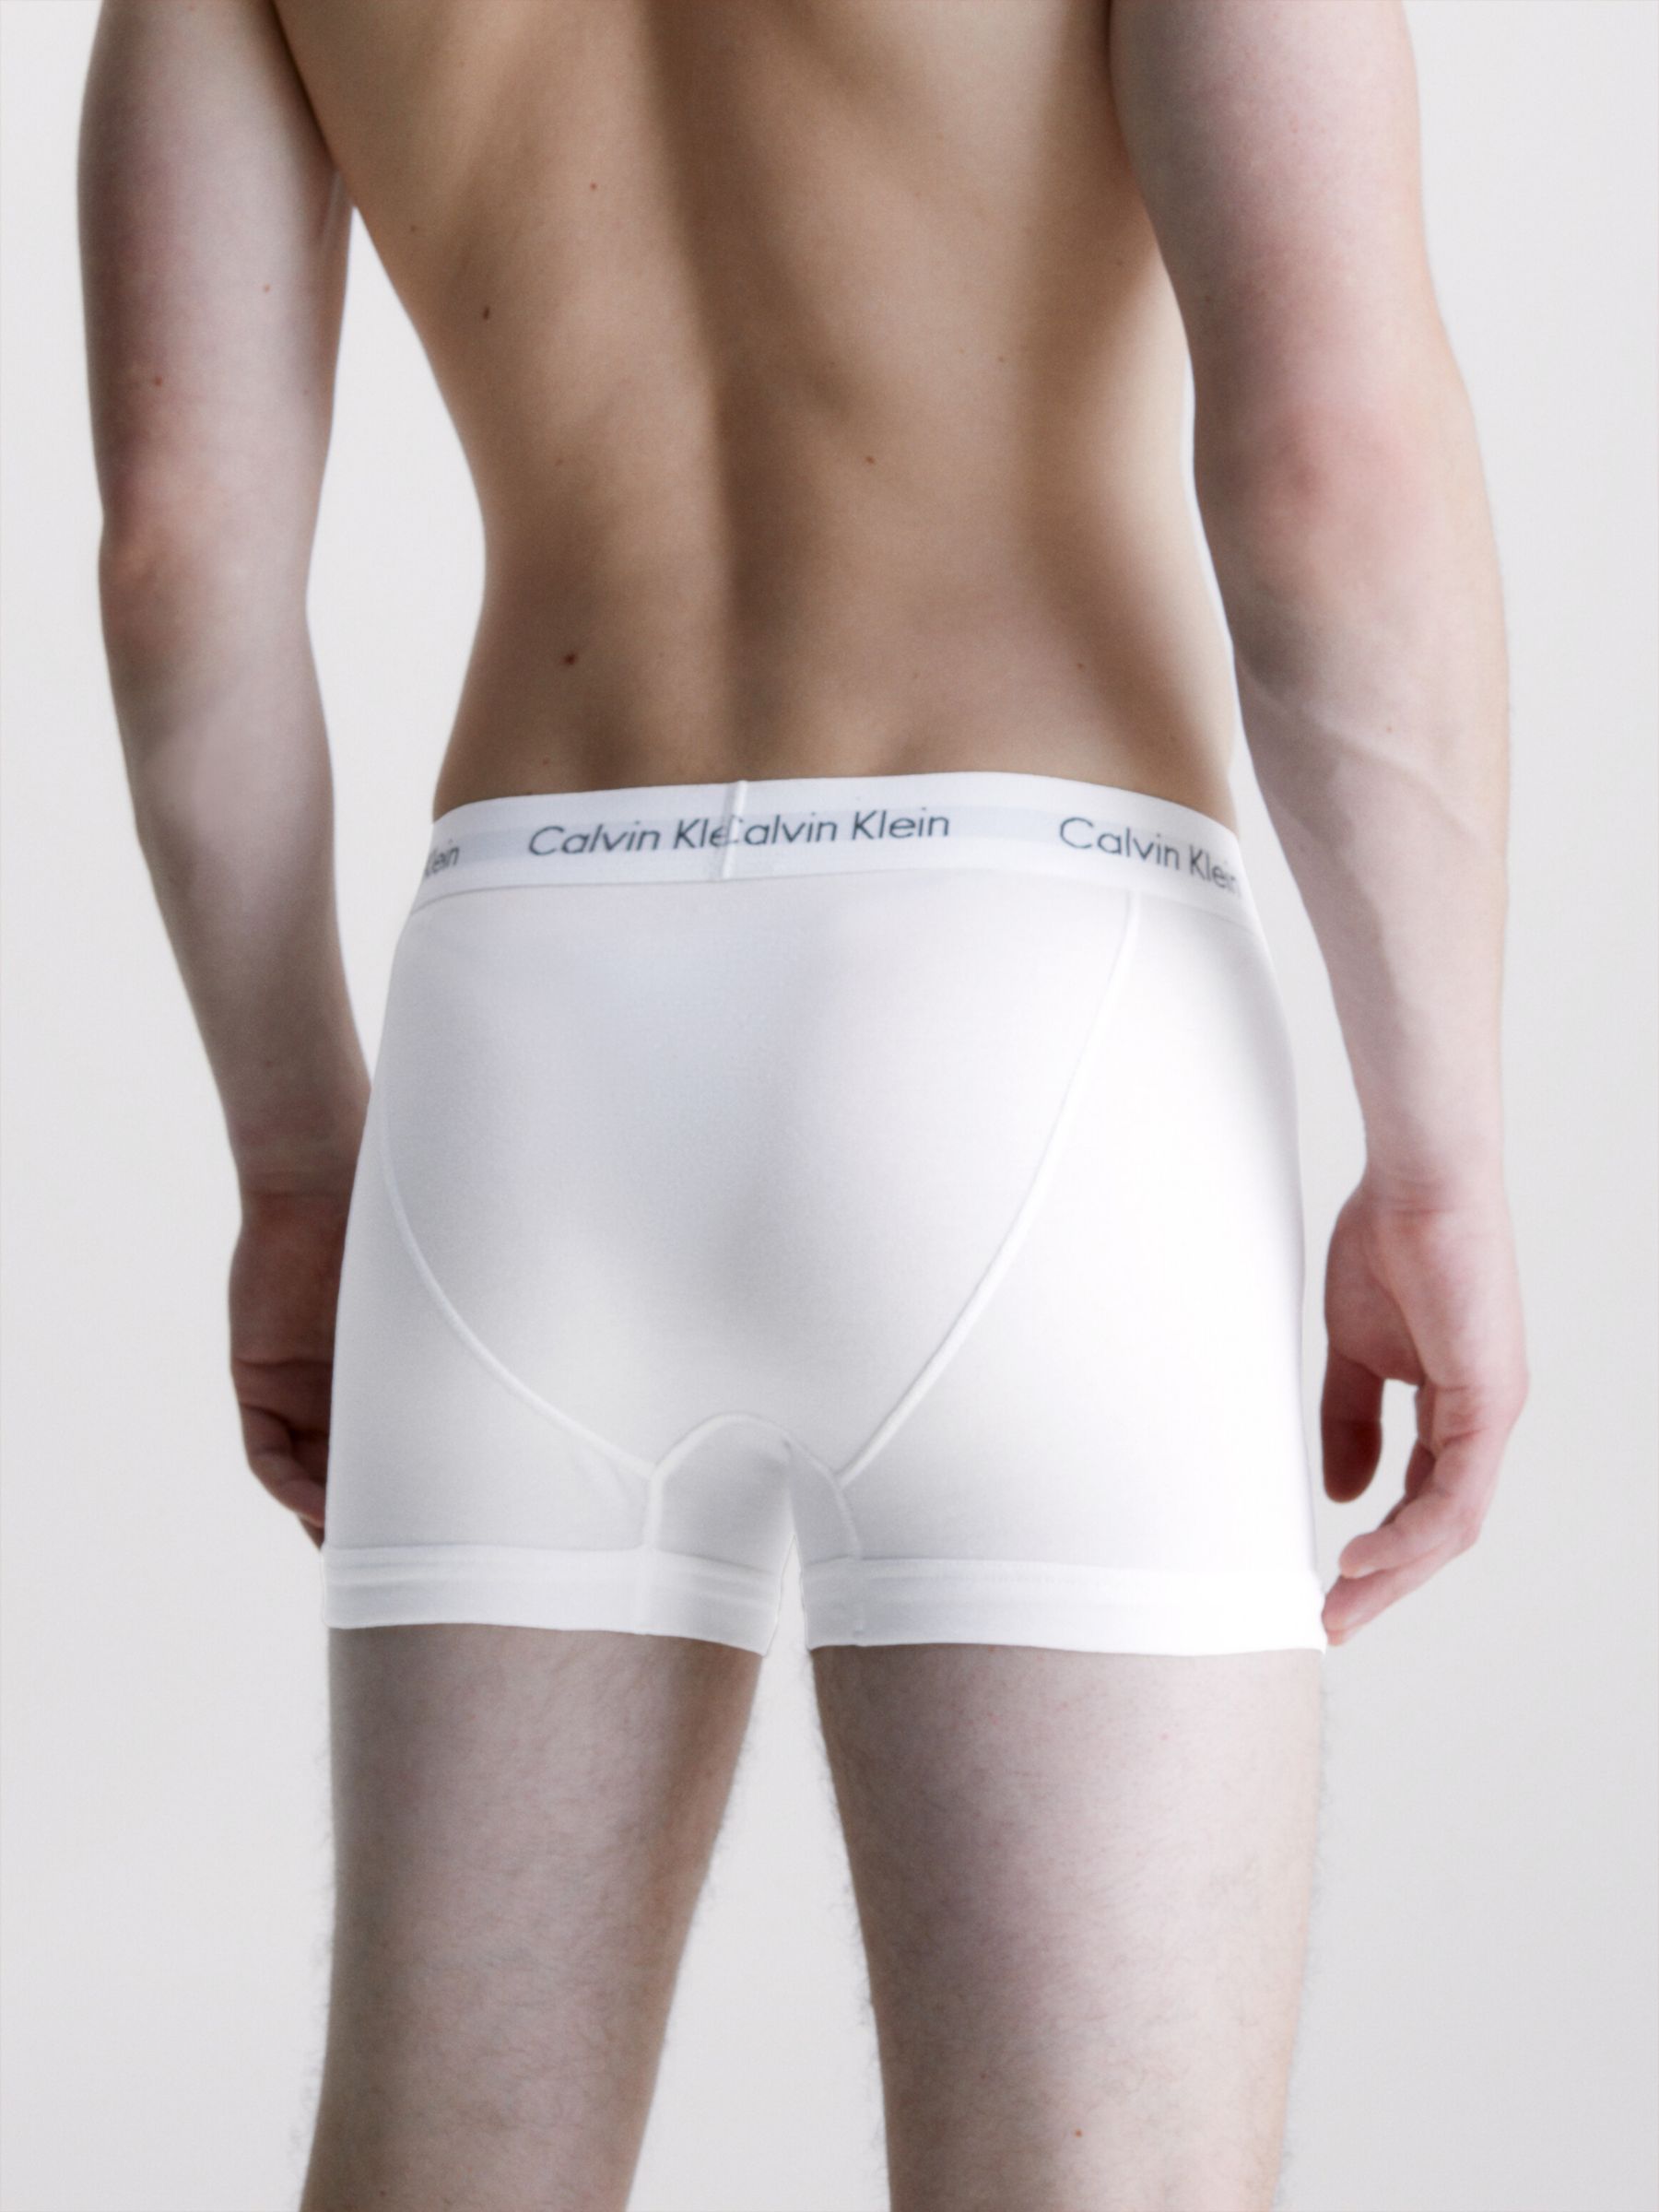 Calvin Klein Regular Cotton Stretch Trunks, Pack of 3, Black/White/Grey Heather, XS